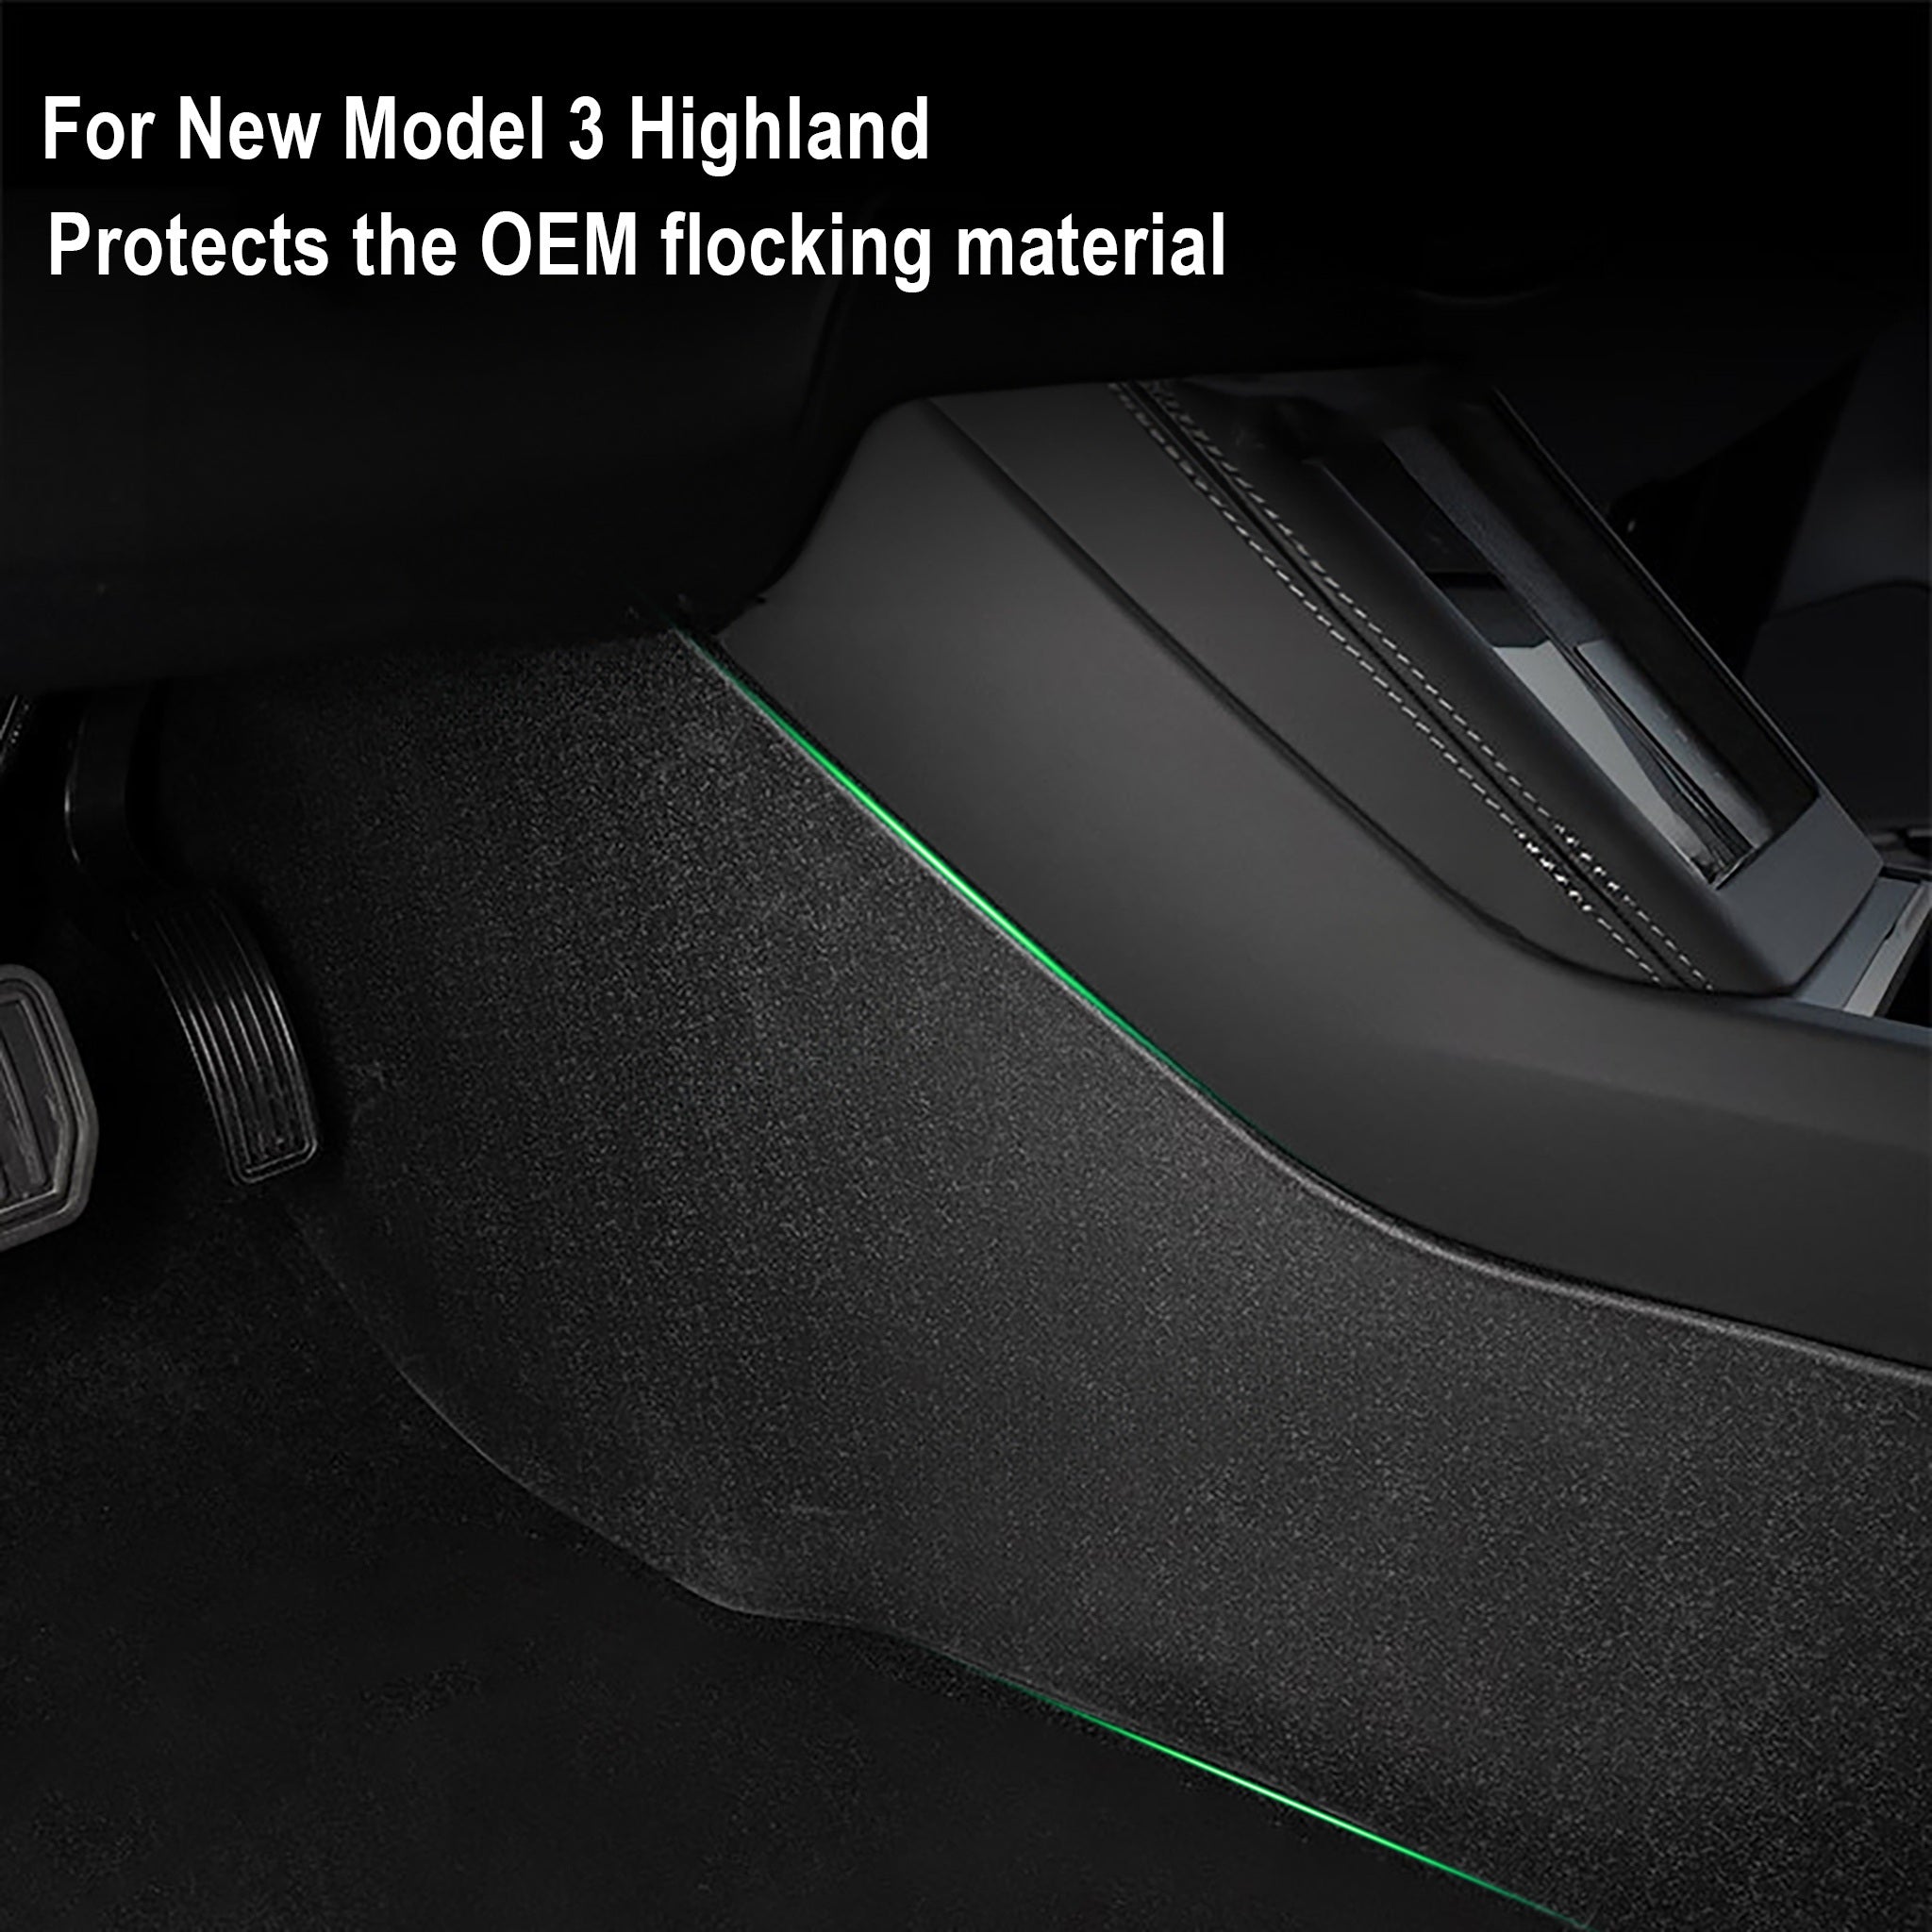 New Model 3 Highland – Yeslak